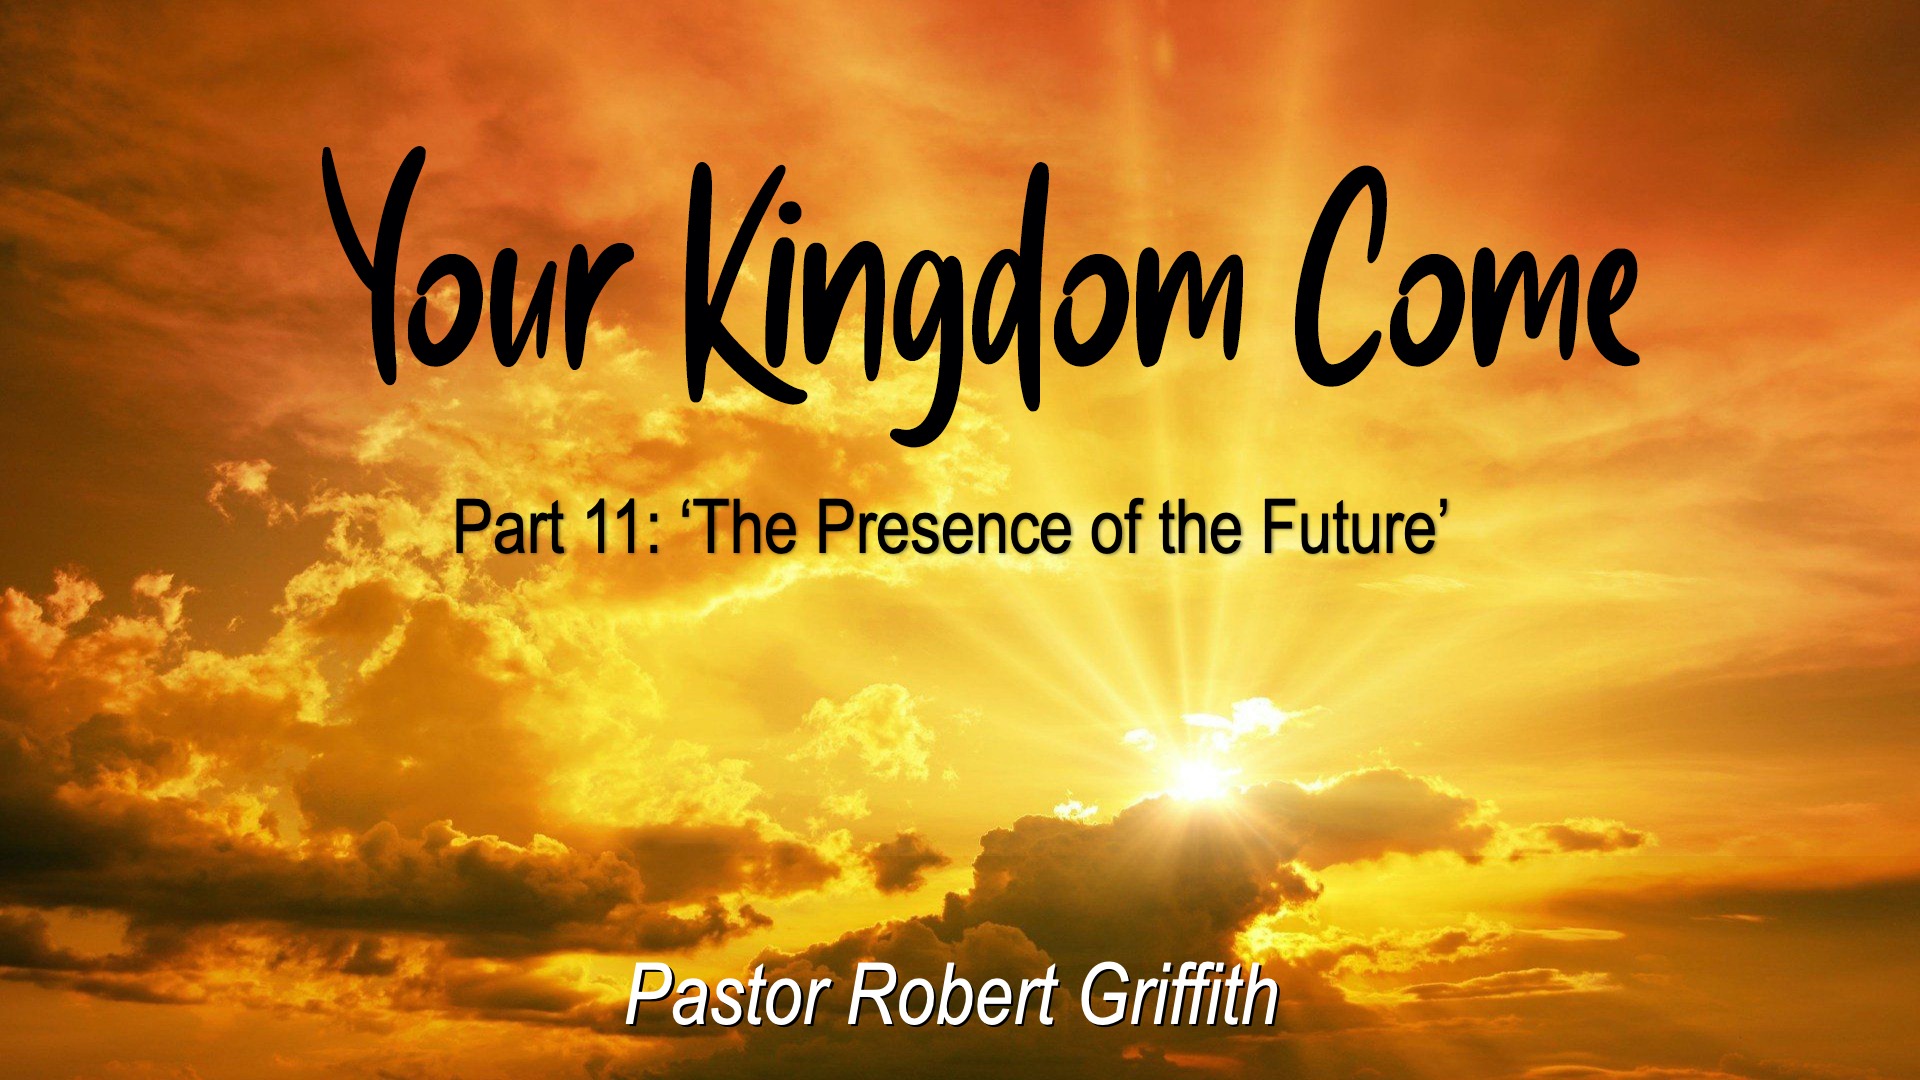 Your Kingdom Come (11)‘The Presence of the Future’